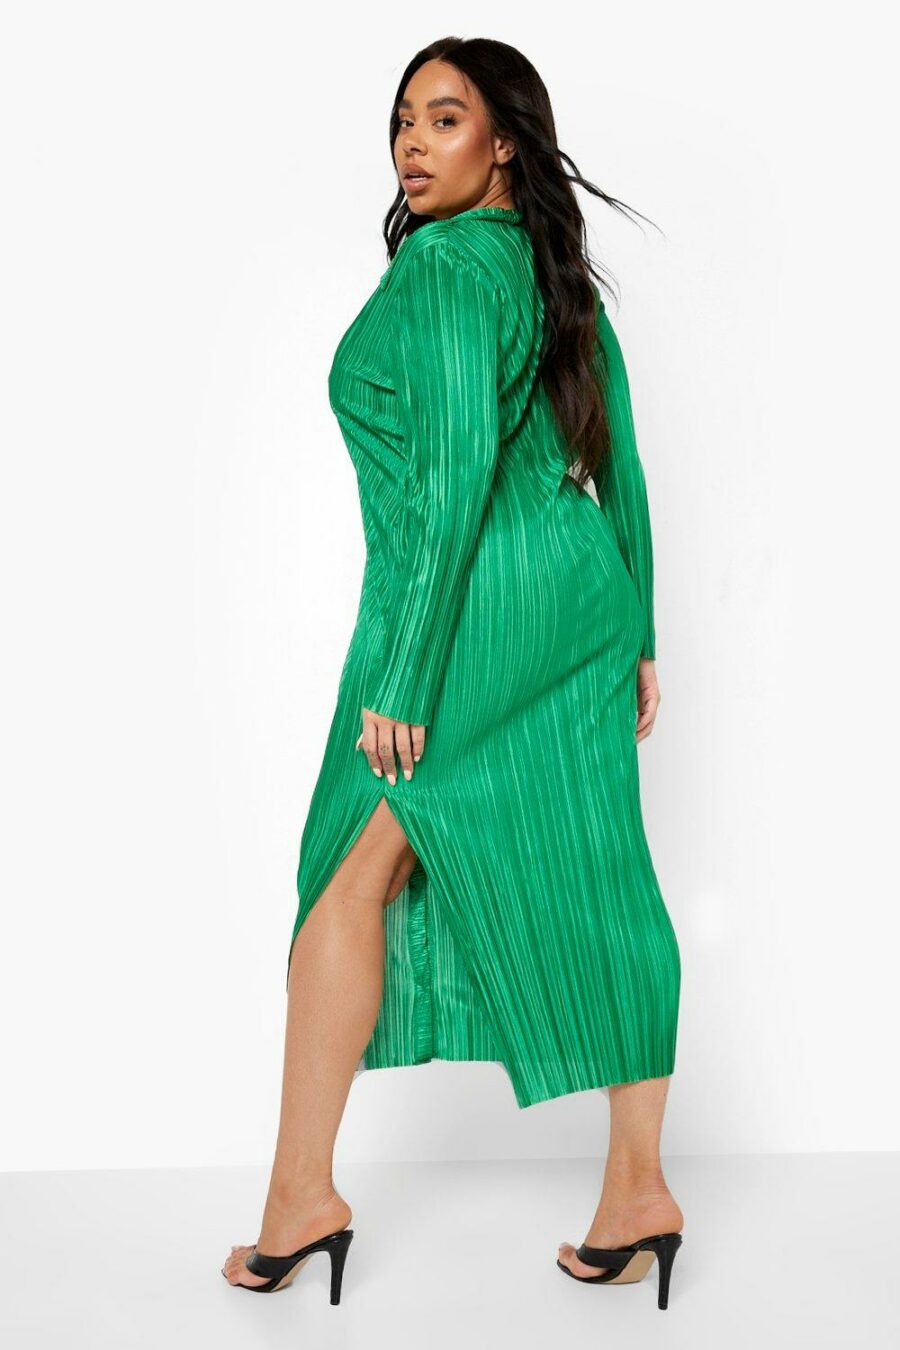 Boohoo-zielona-sukienka-maxi-koszulowa-plisowana-defekt-48